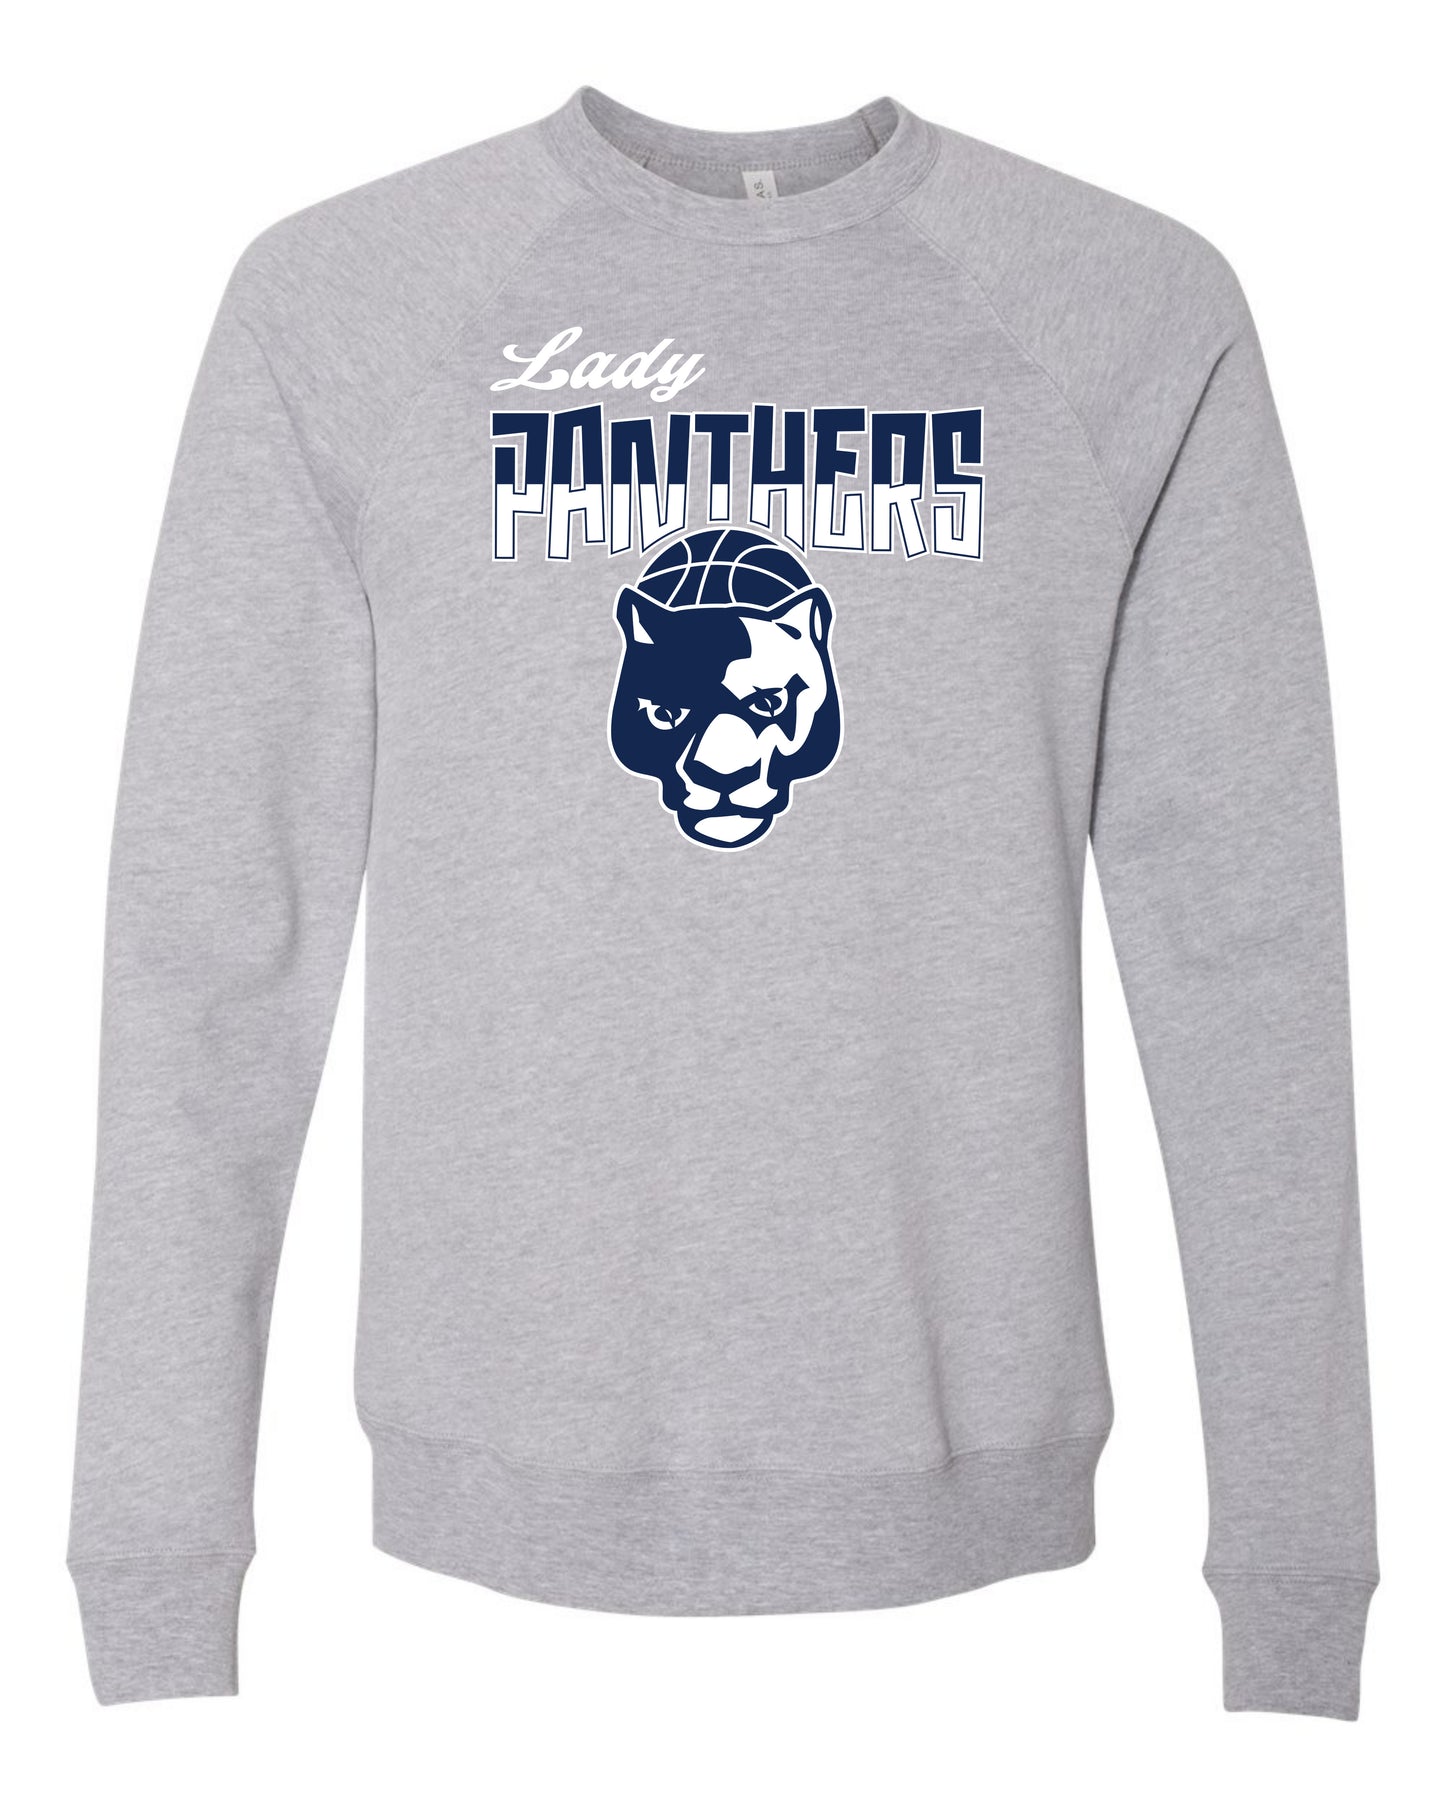 Lady Panthers Two-Tone - Adult Sweatshirt